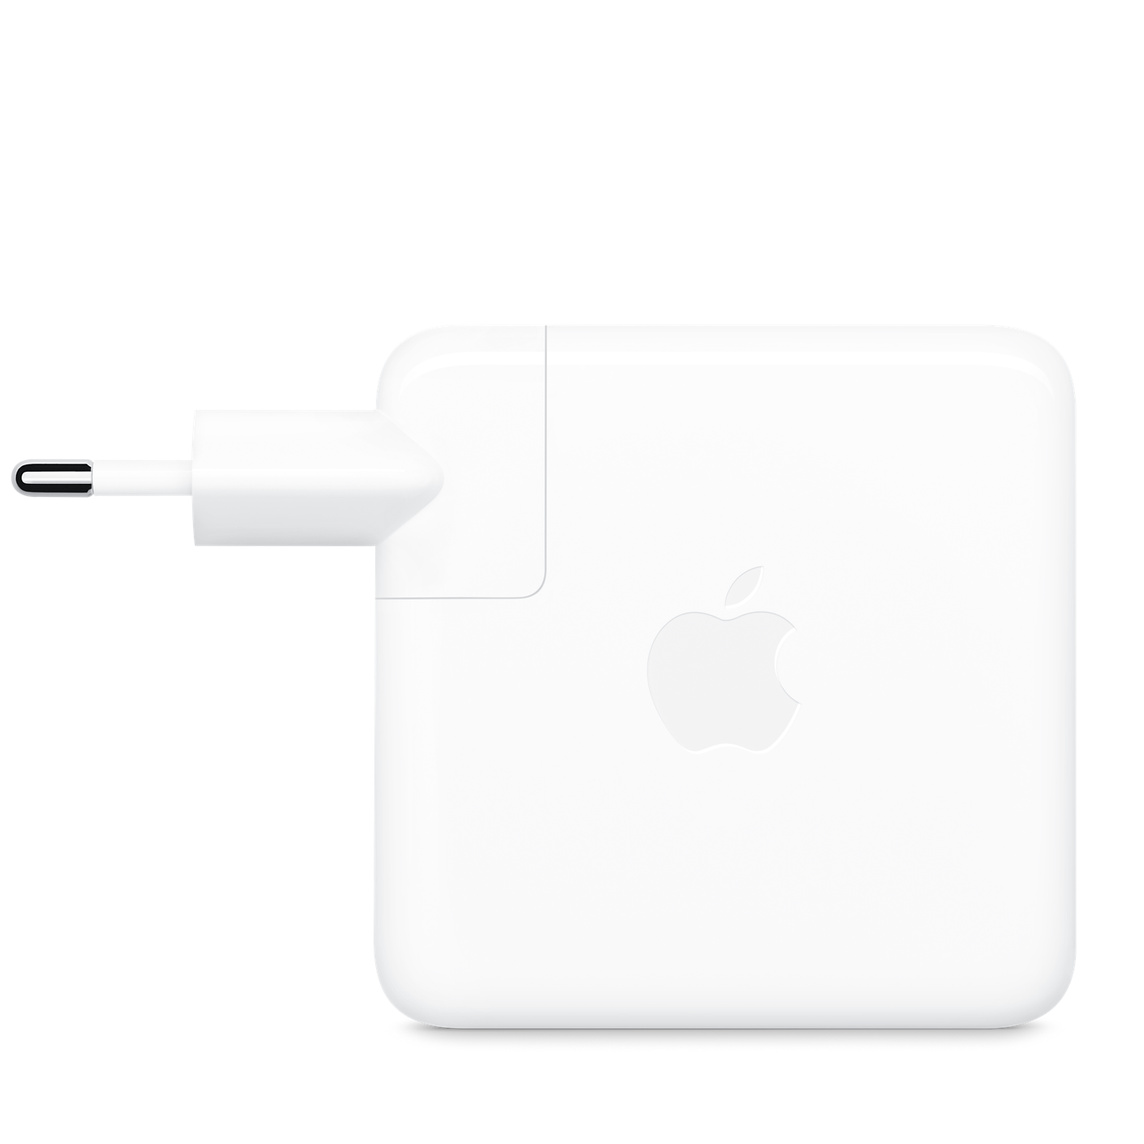 Apple 67 W USB-C Power Adapter